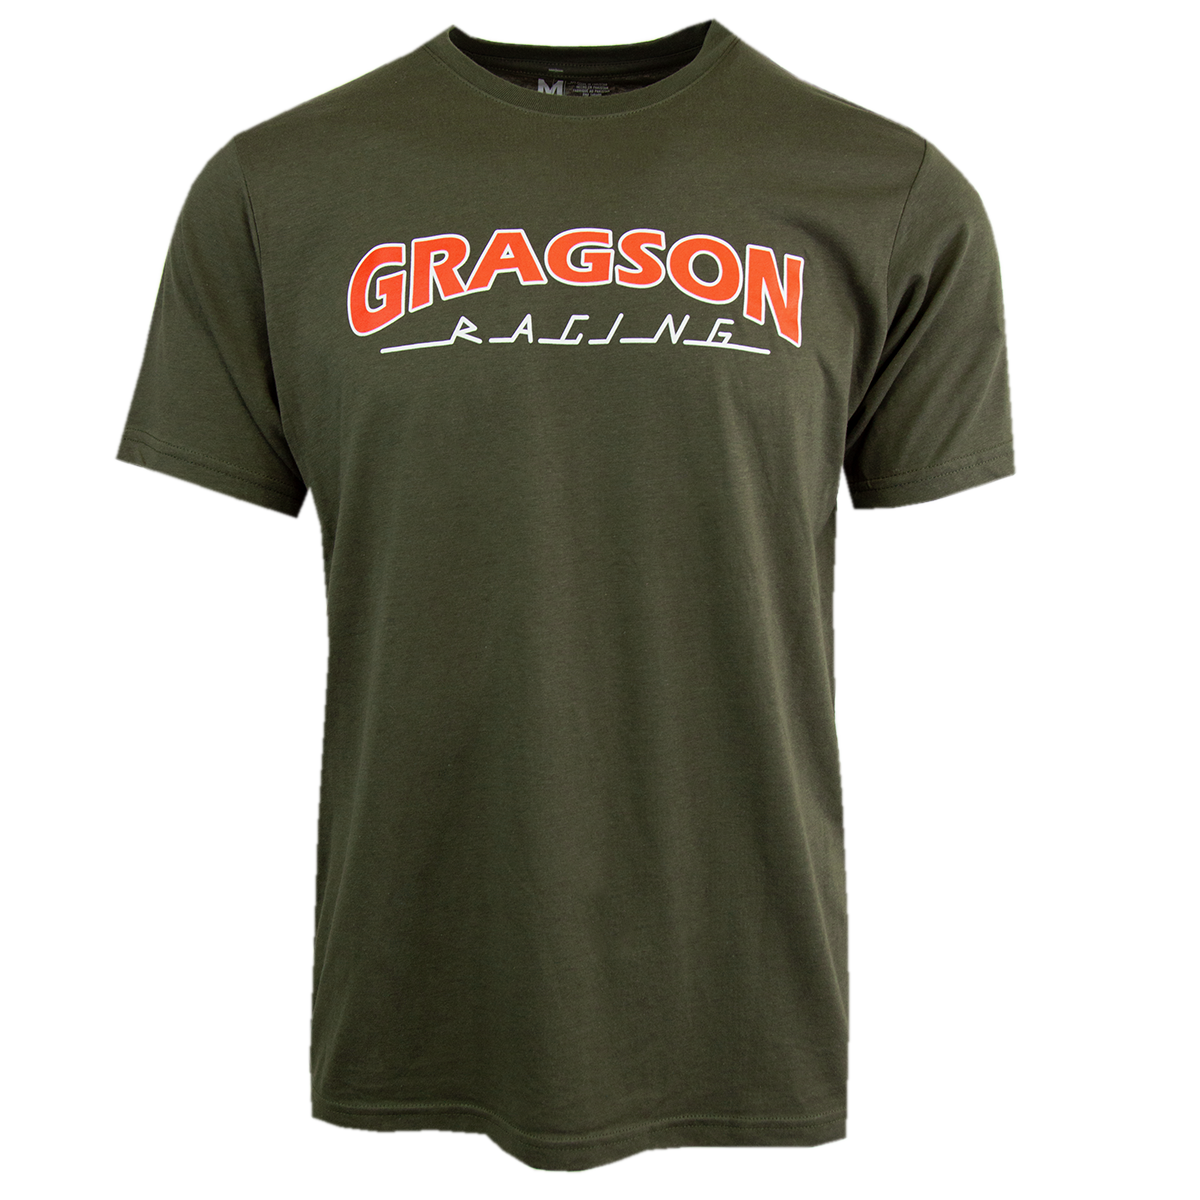 Gragson Racing Short Sleeve Tee